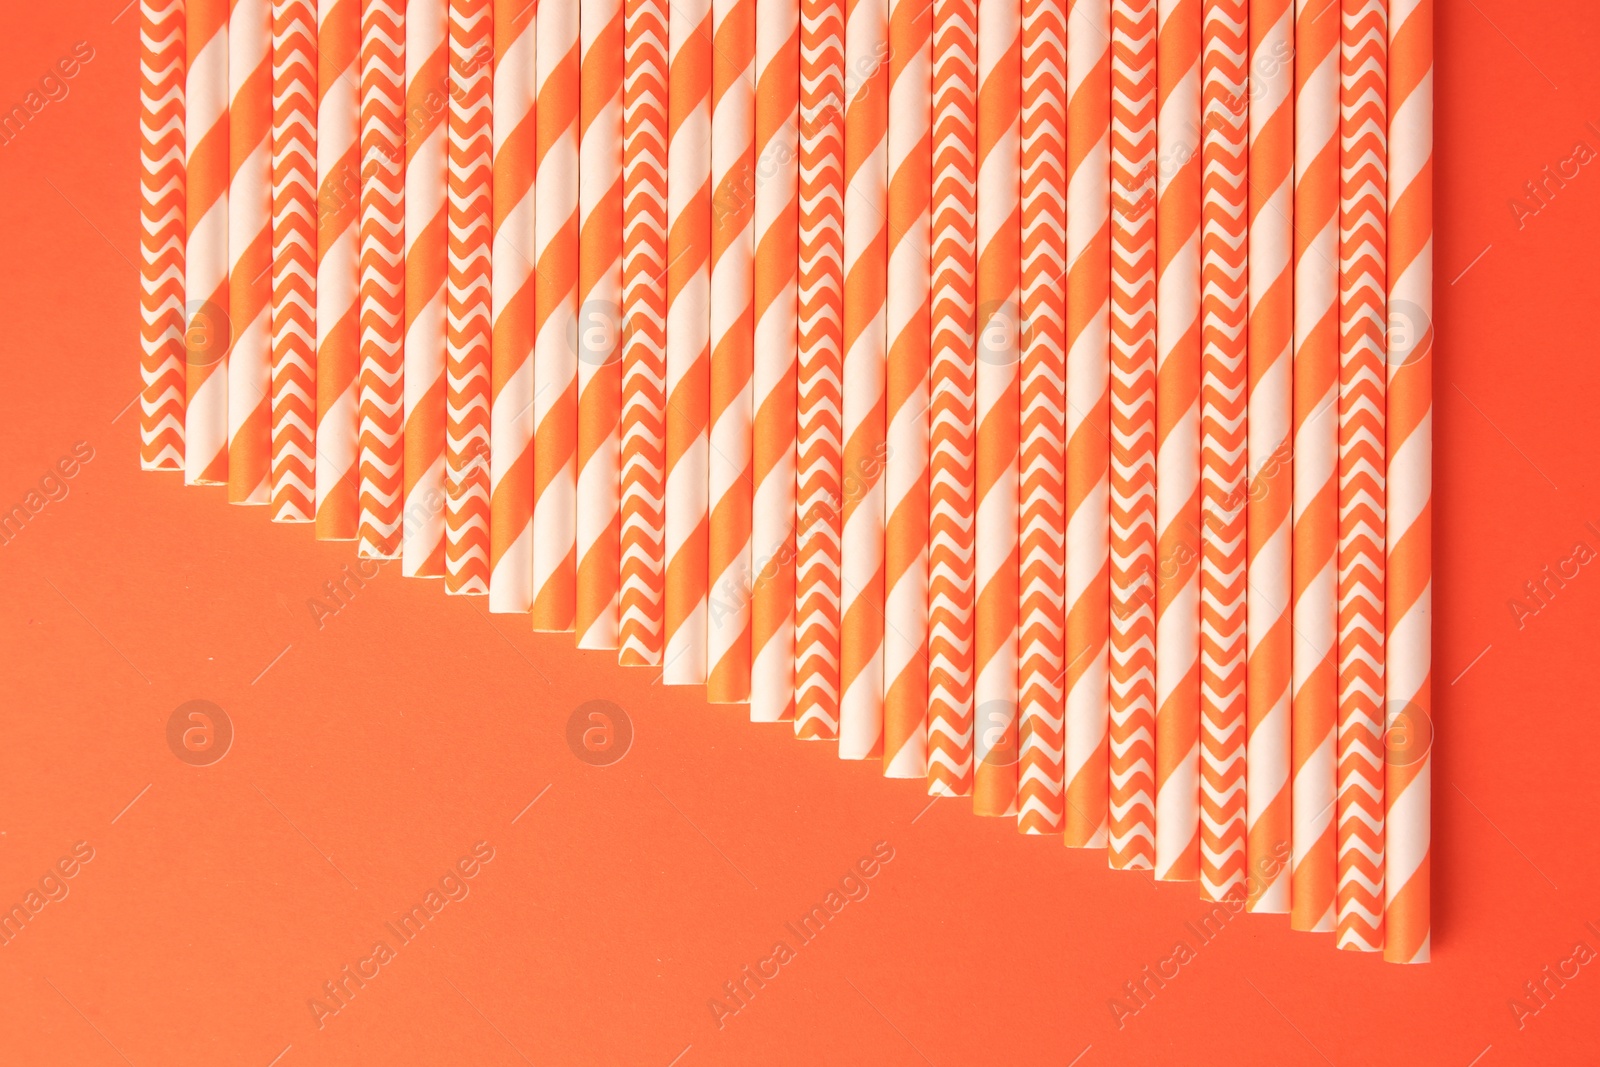 Photo of Many striped paper drinking straws on orange background, flat lay